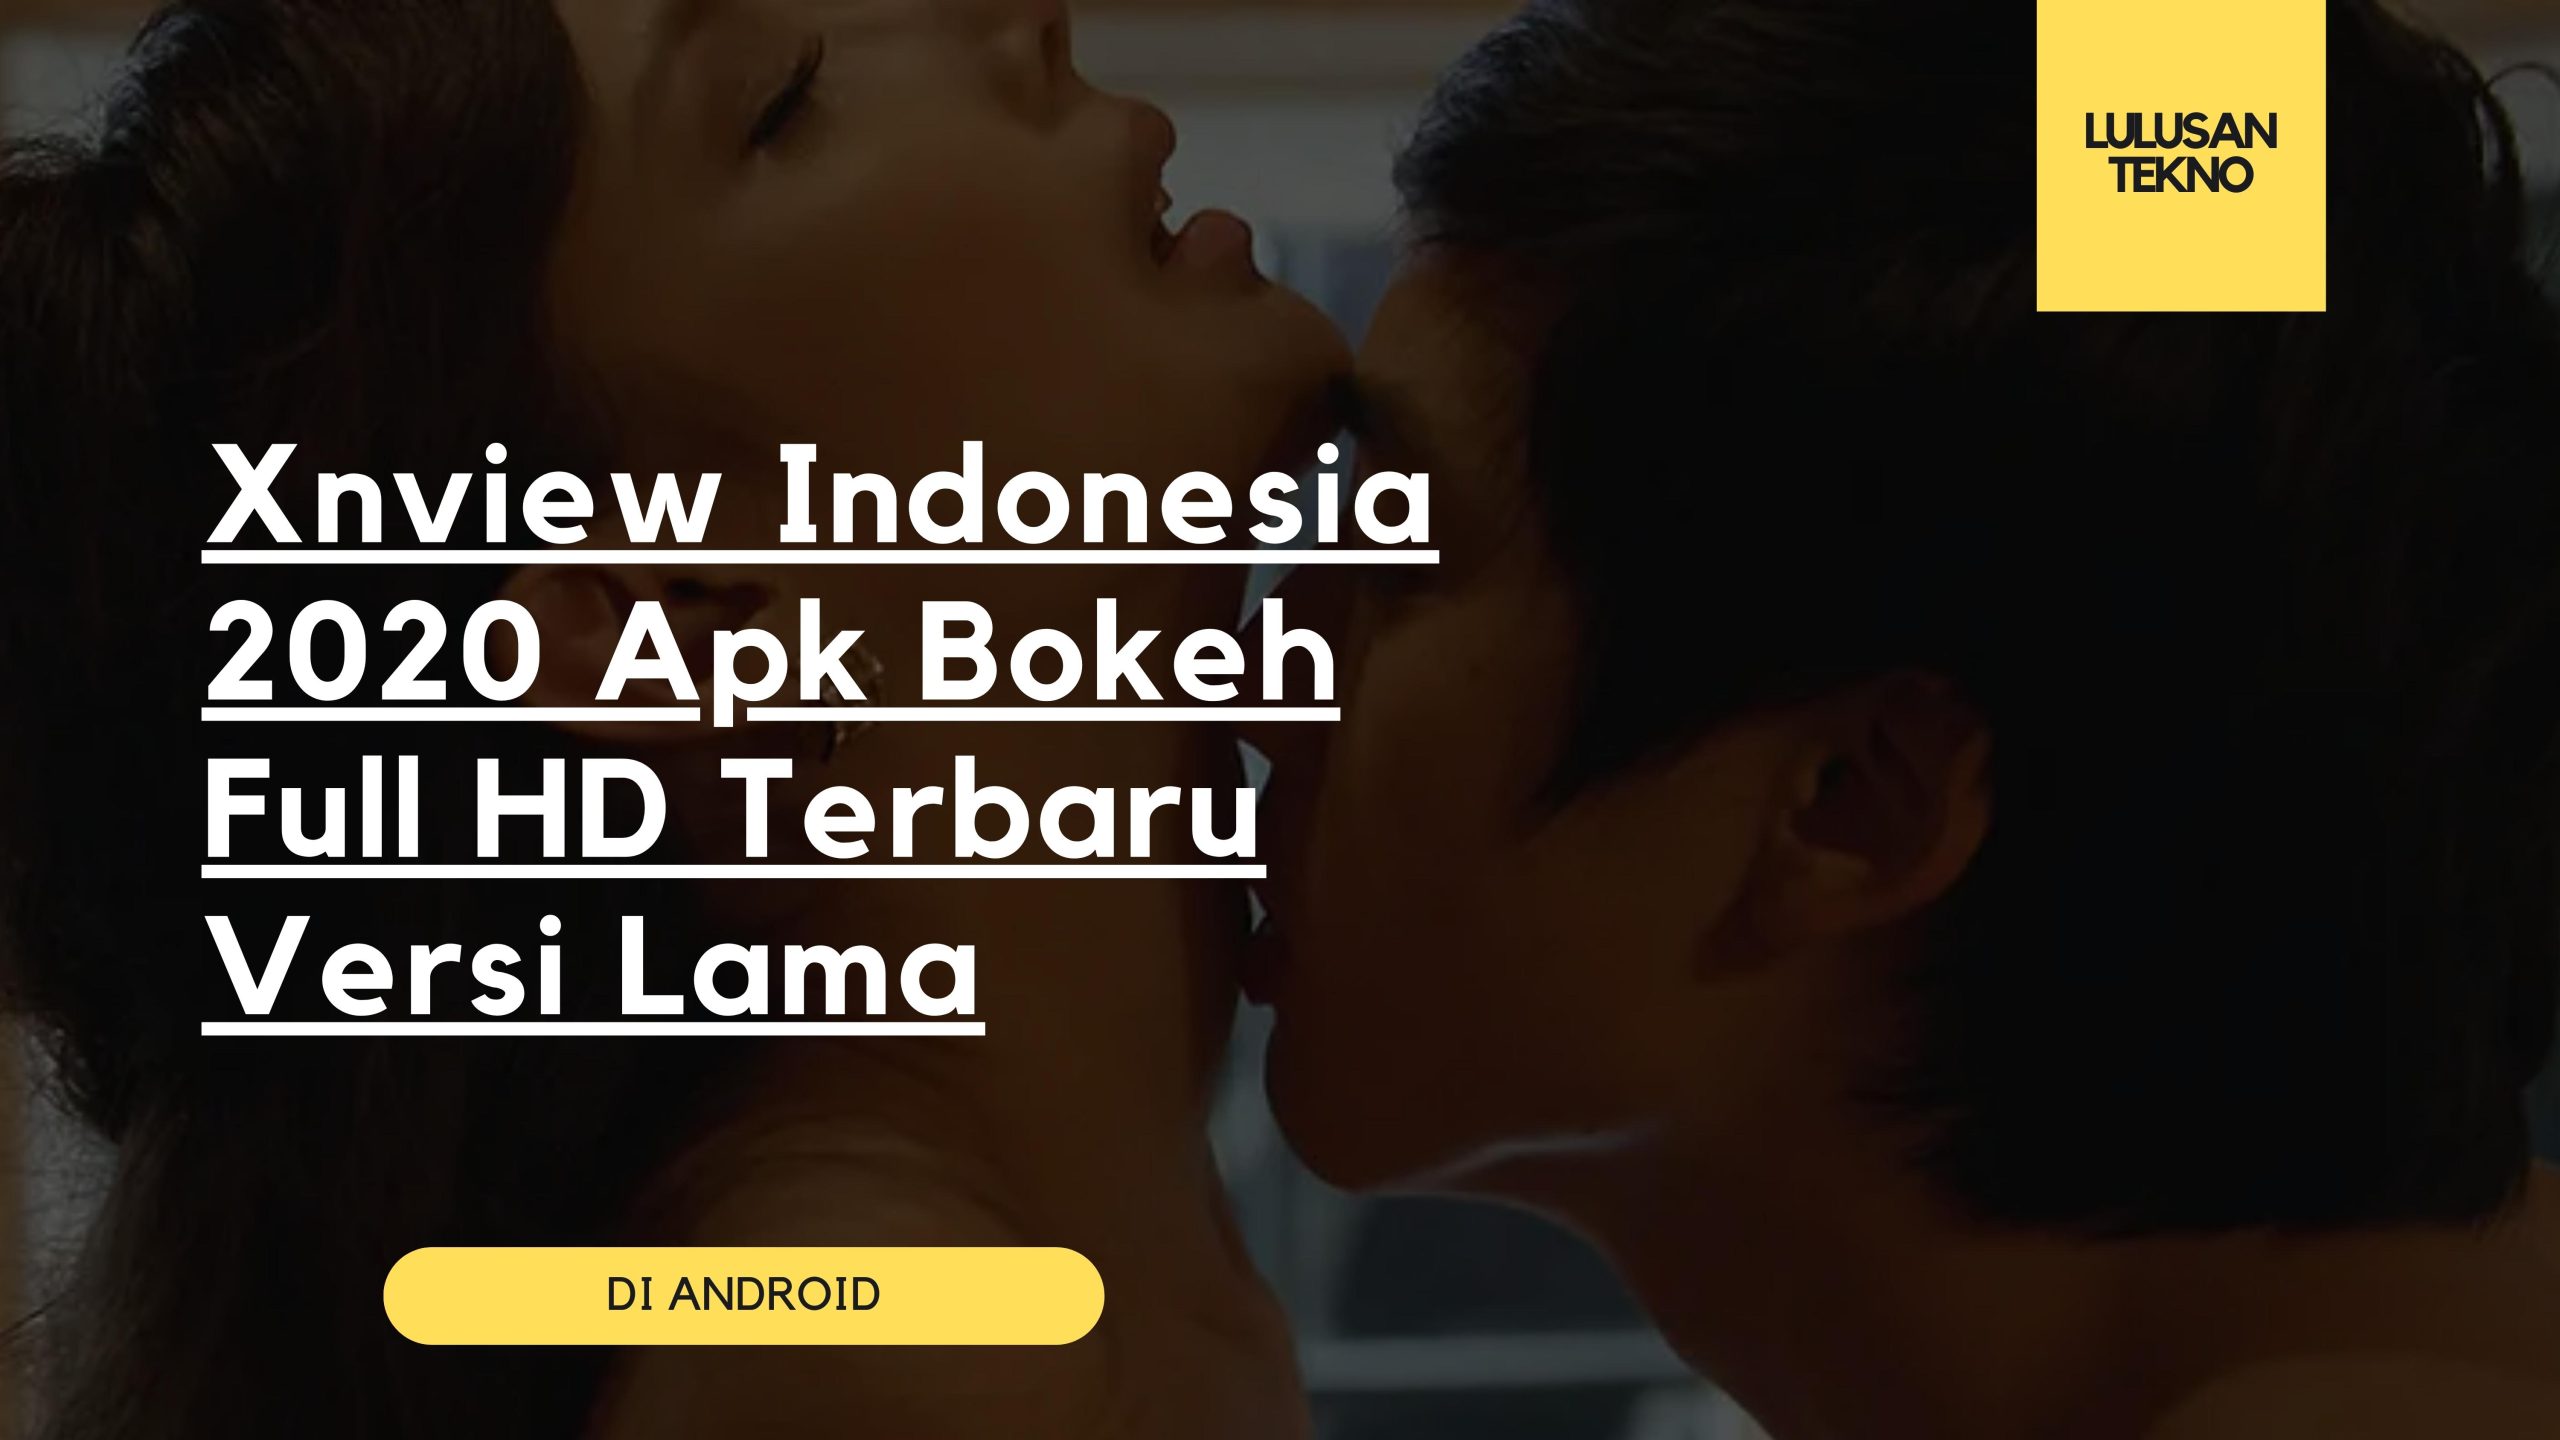 Xnview Indonesia 2020 Apk Bokeh Full HD Terbaru Versi Lama